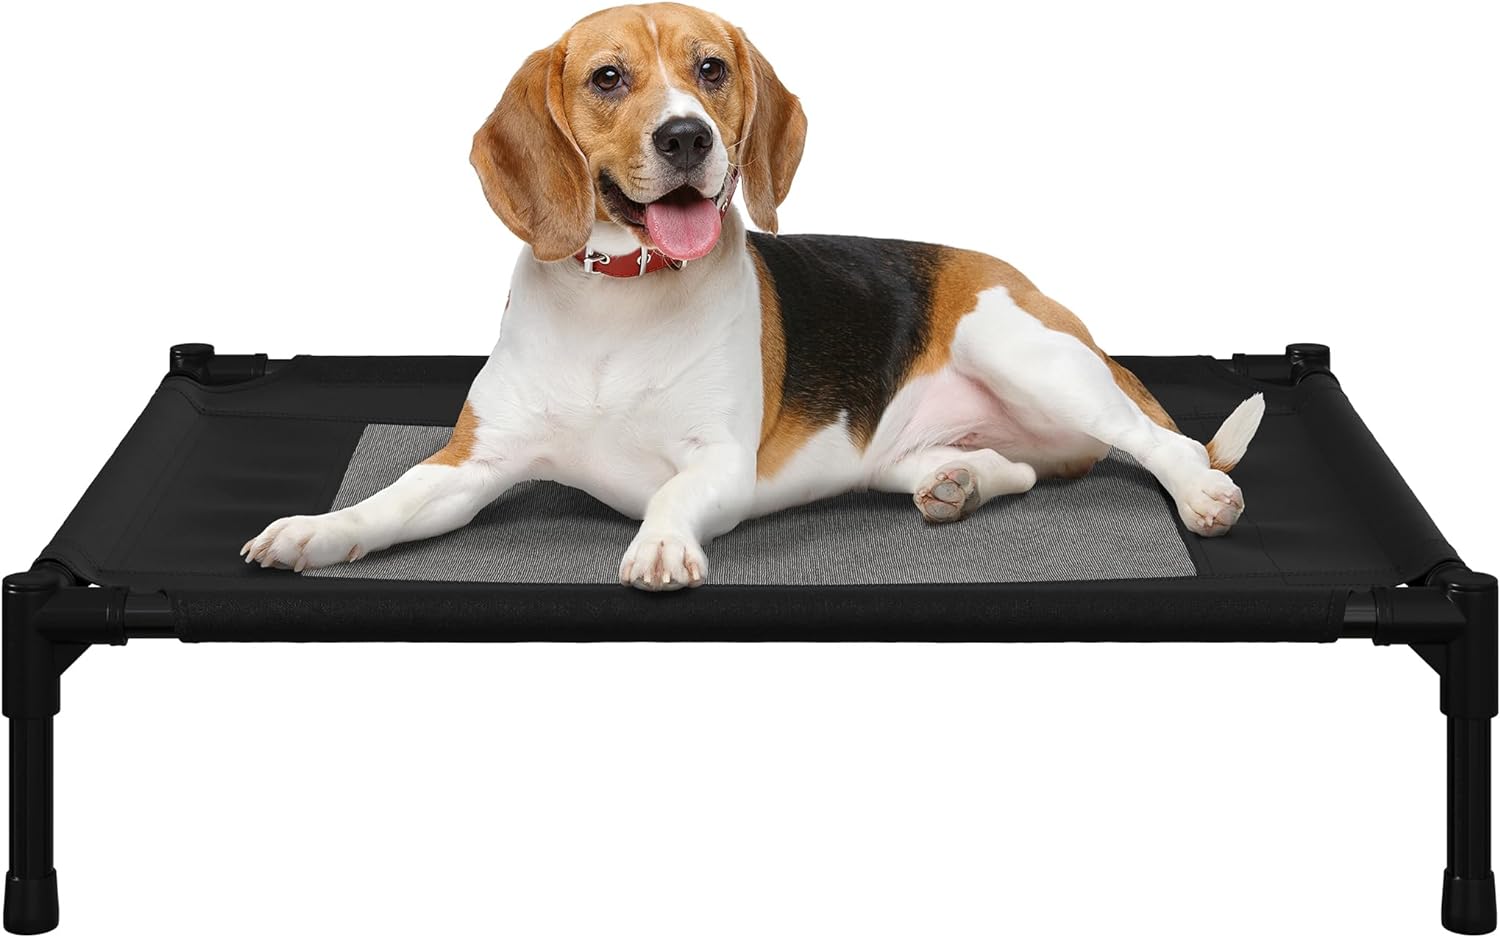 PETMAKER Elevated Indoor/Outdoor Pet Bed - Medium (30"L x 24"W x 7"H, up to 50 lbs) $14.60 @ Amazon